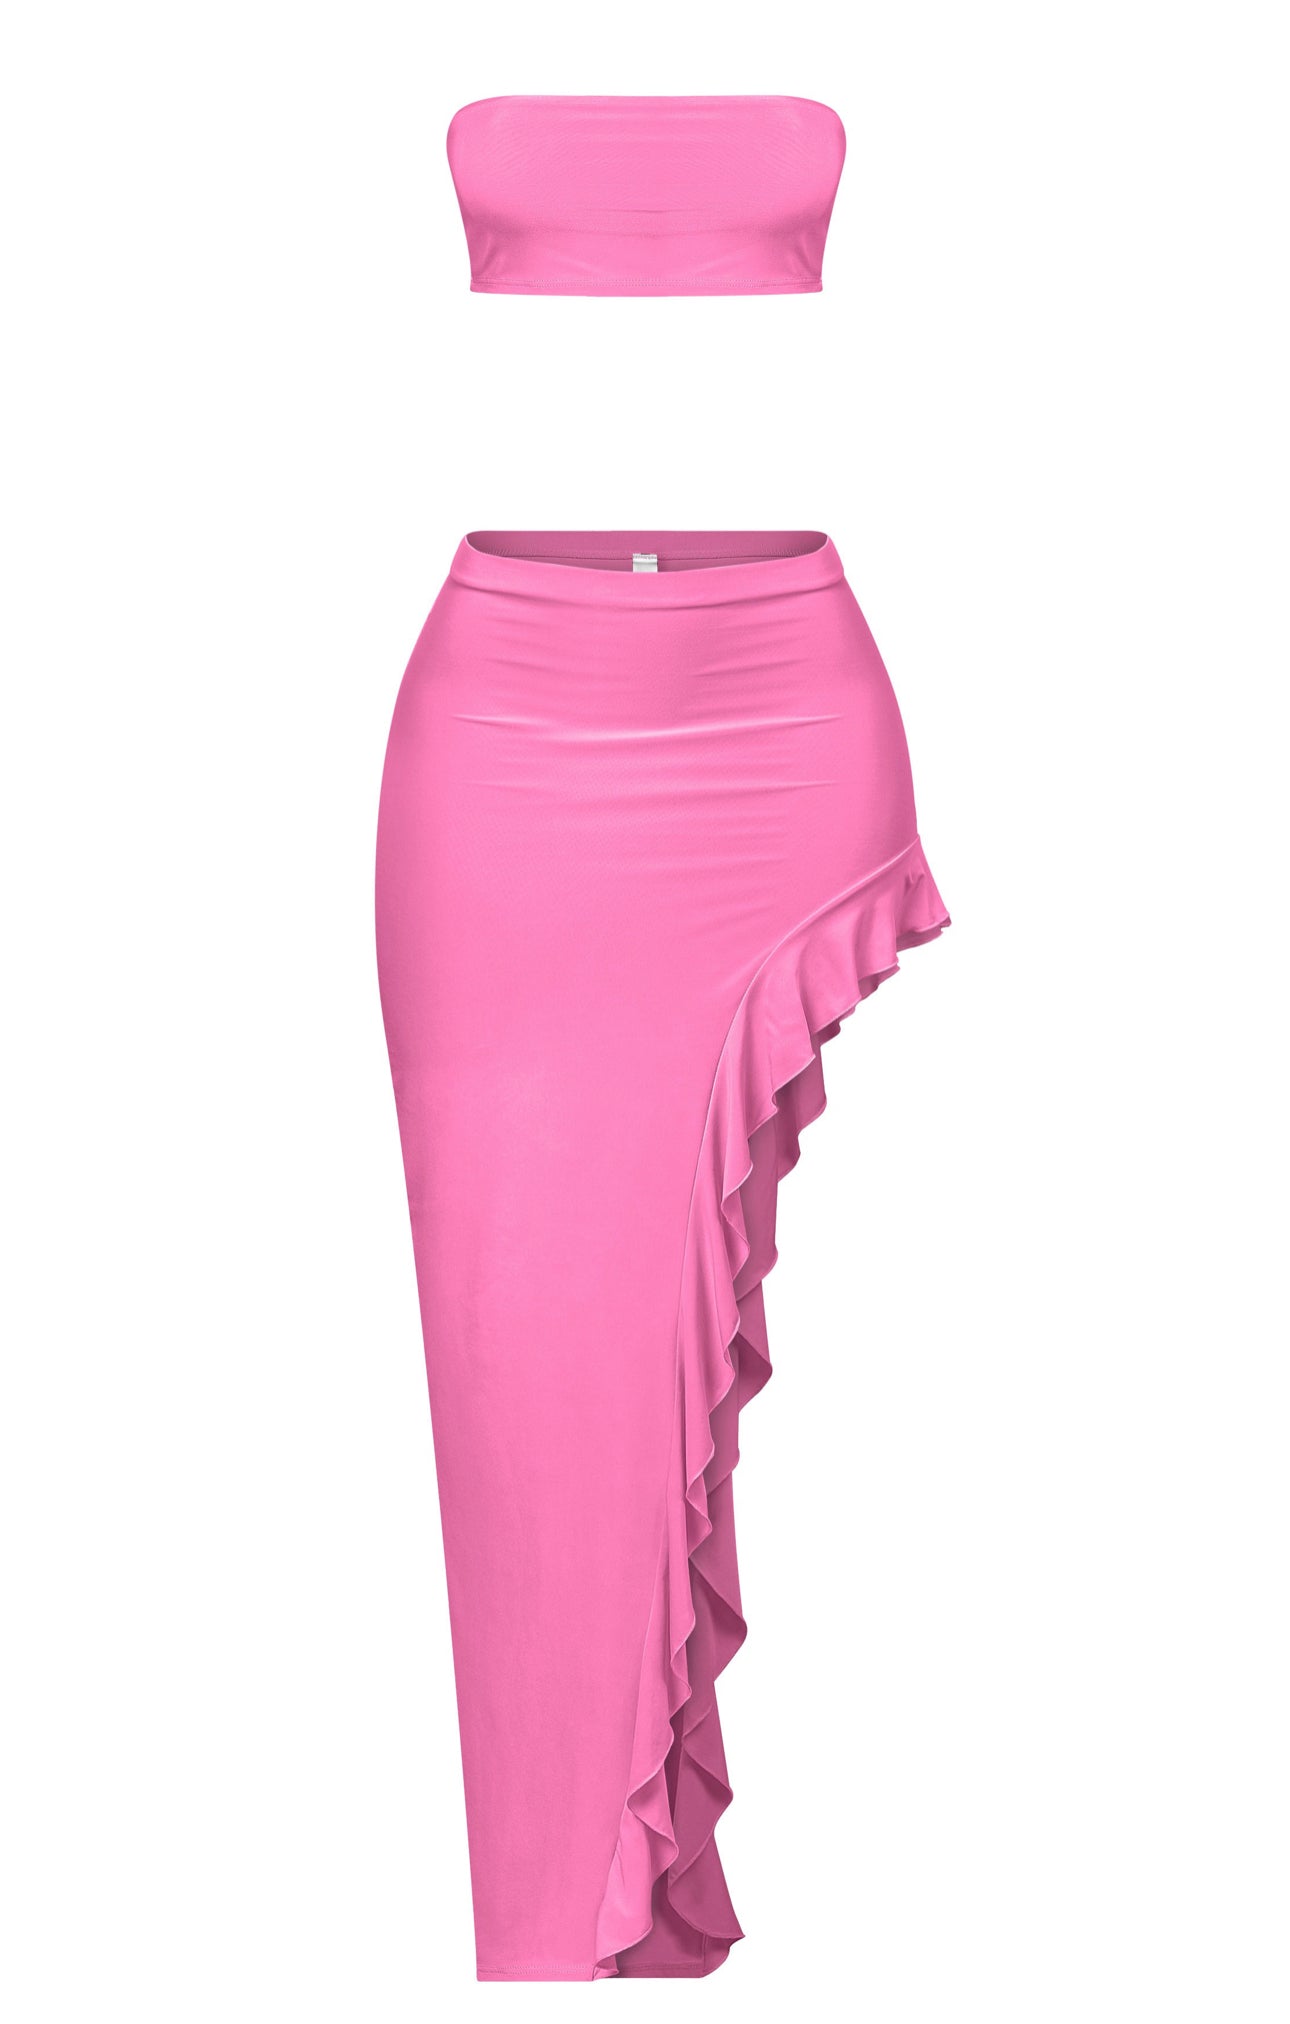 Naylea Ruffled Skirt Set (Pink)